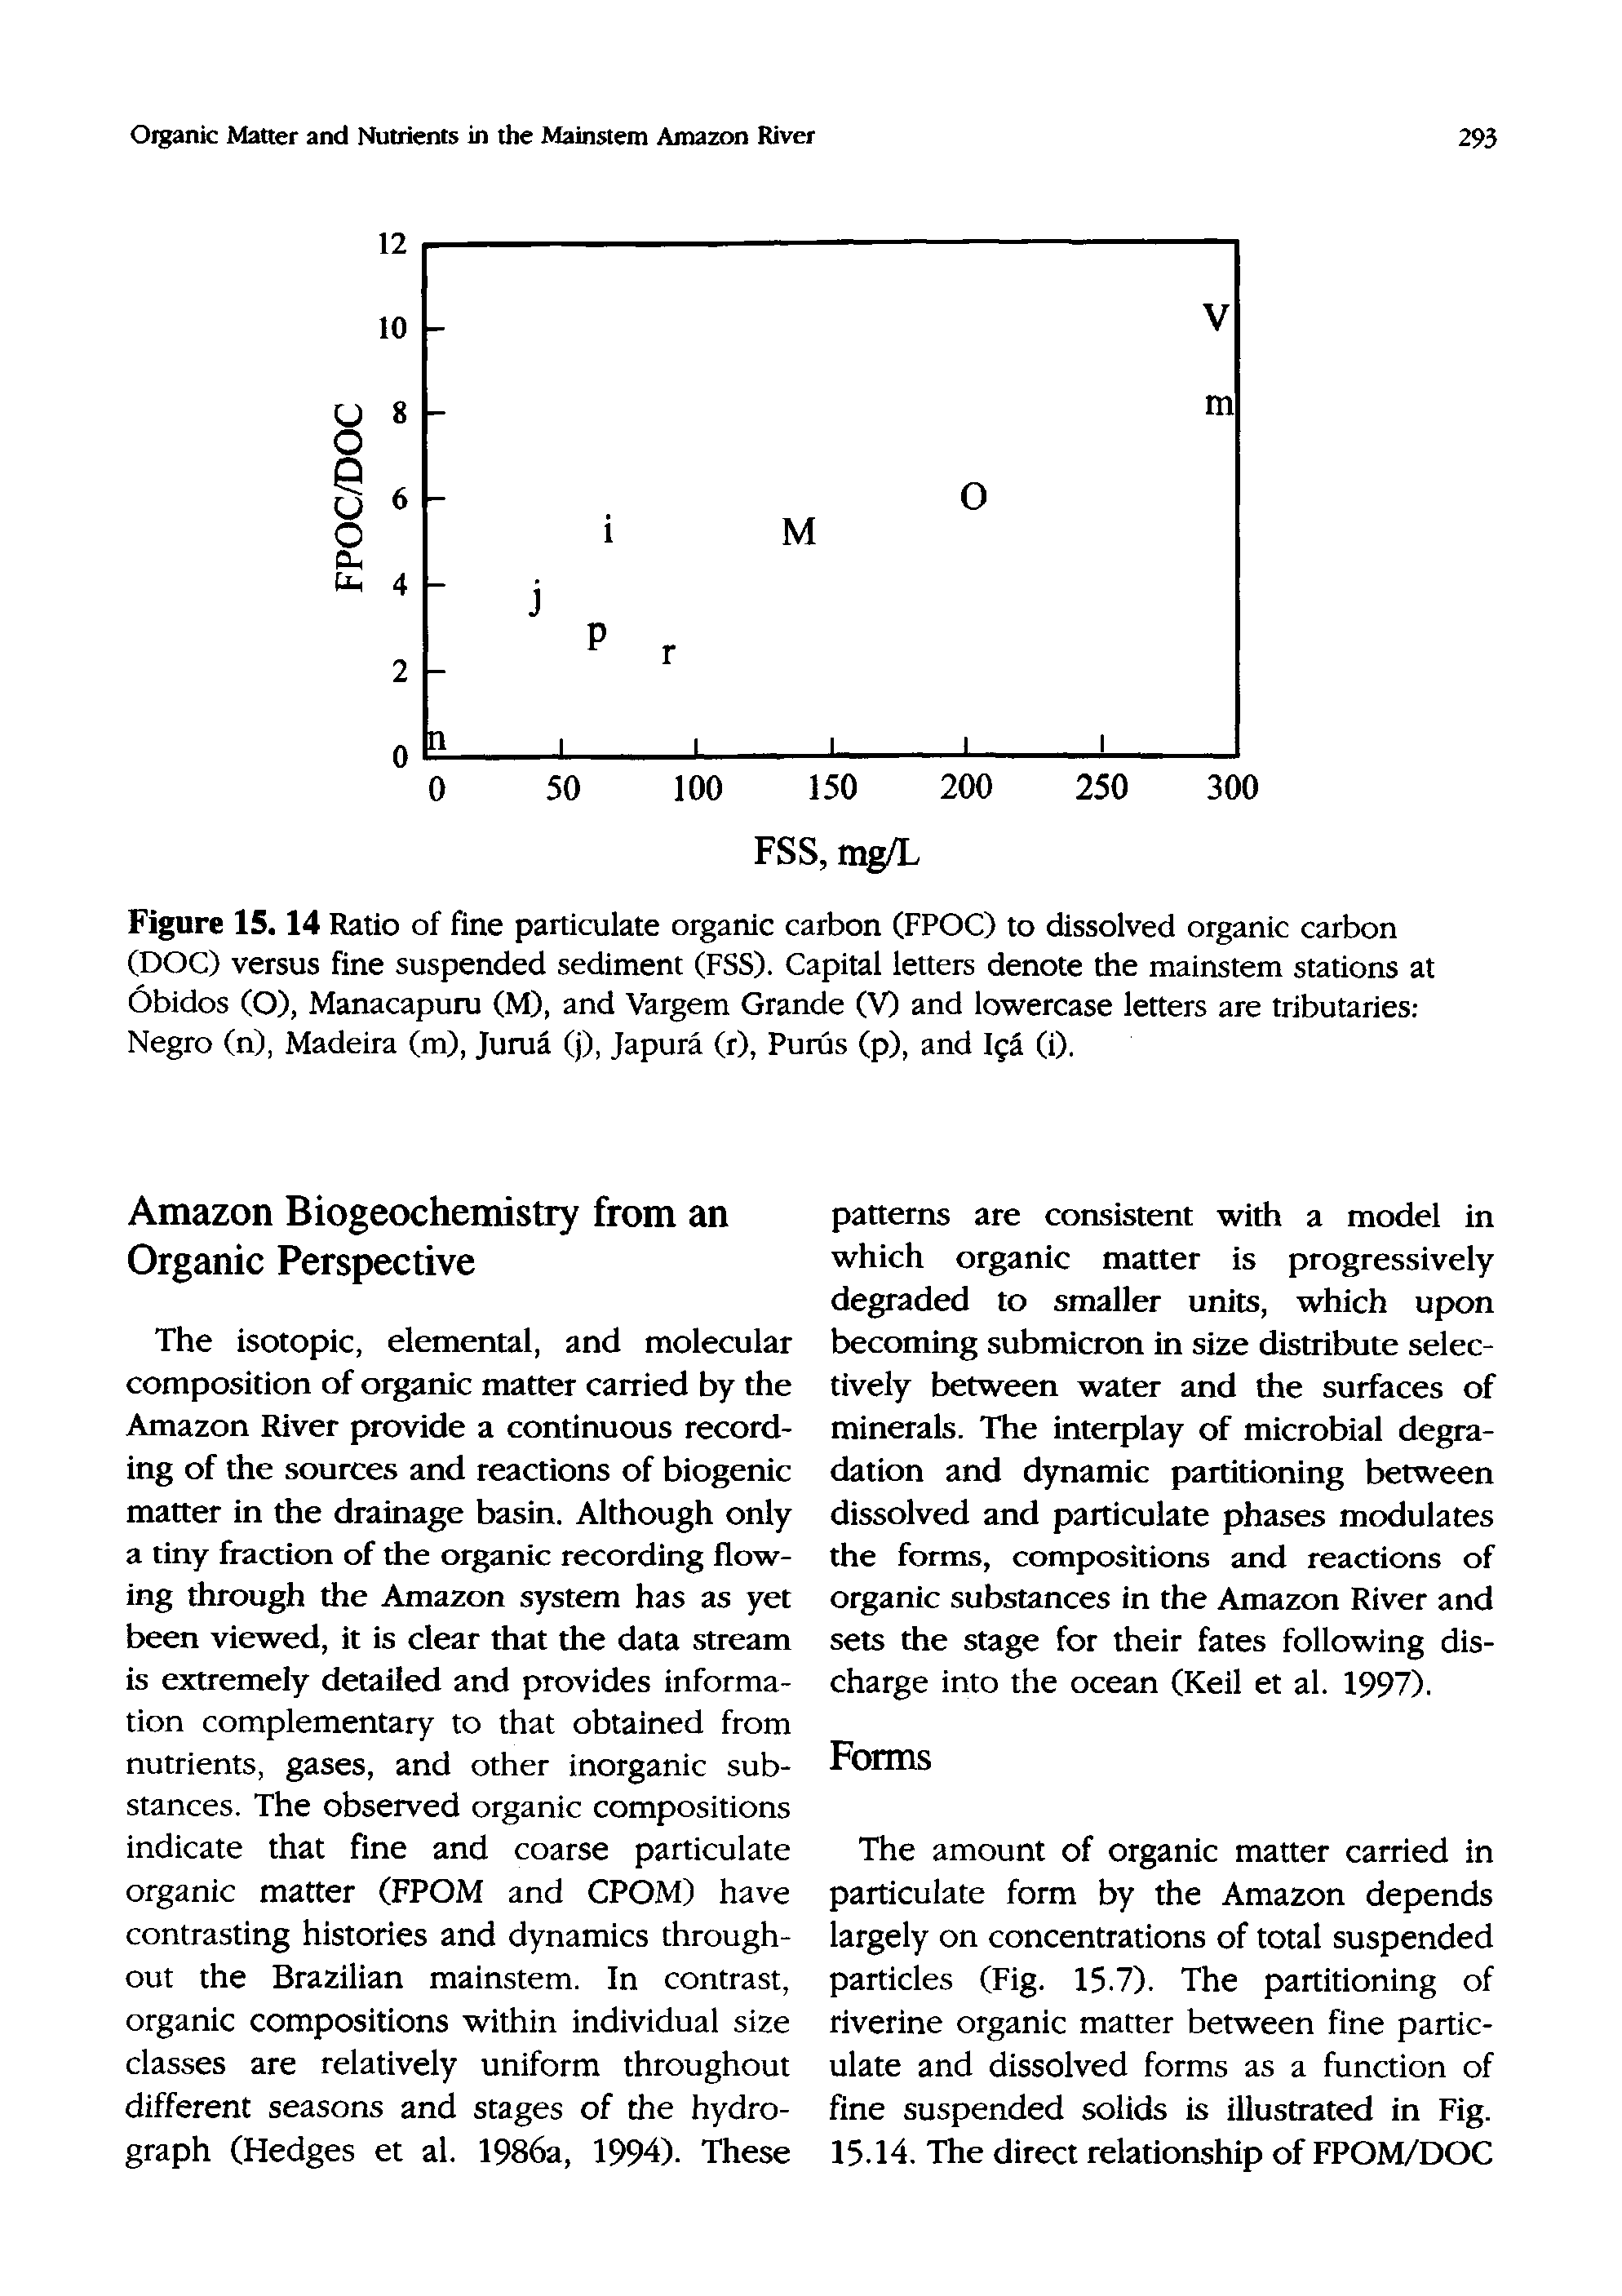 Figure 15.14 Ratio of fine particulate organic carbon (FPOC) to dissolved organic carbon (DOC) versus fine suspended sediment (FSS). Capital letters denote the mainstem stations at Obidos (O), Manacapuru (M), and Vargem Grande (V) and lowercase letters are tributaries Negro (n), Madeira (m), Jurua (j), Japura (r), Purus (p), and Igi (i).